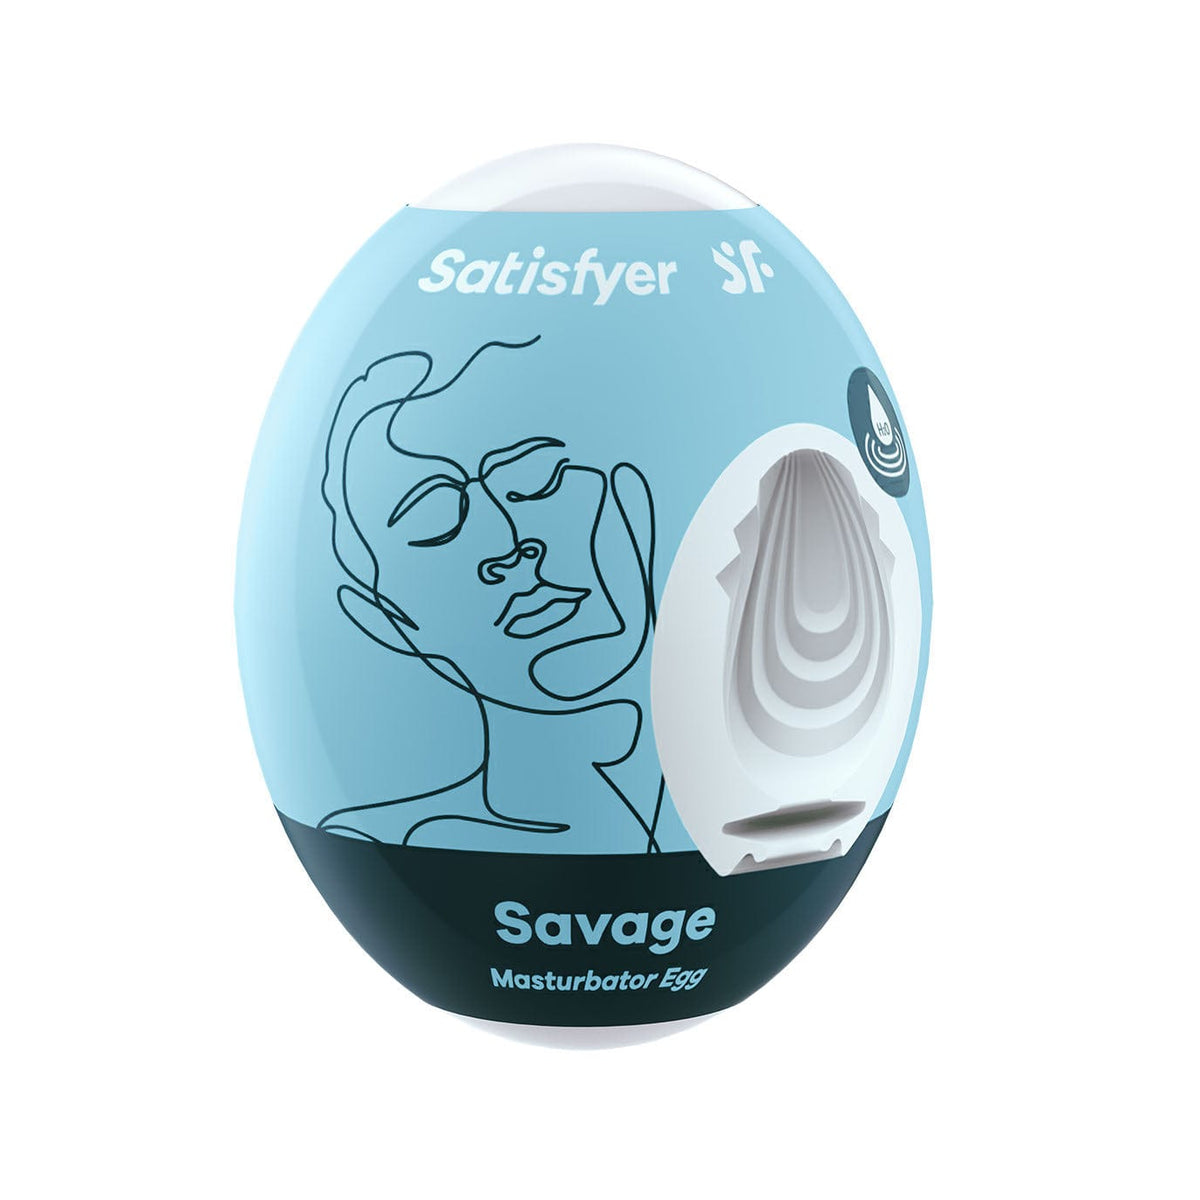 Satisfyer - Savage Masturbator Egg (Blue) -  Masturbator Egg (Non Vibration)  Durio.sg